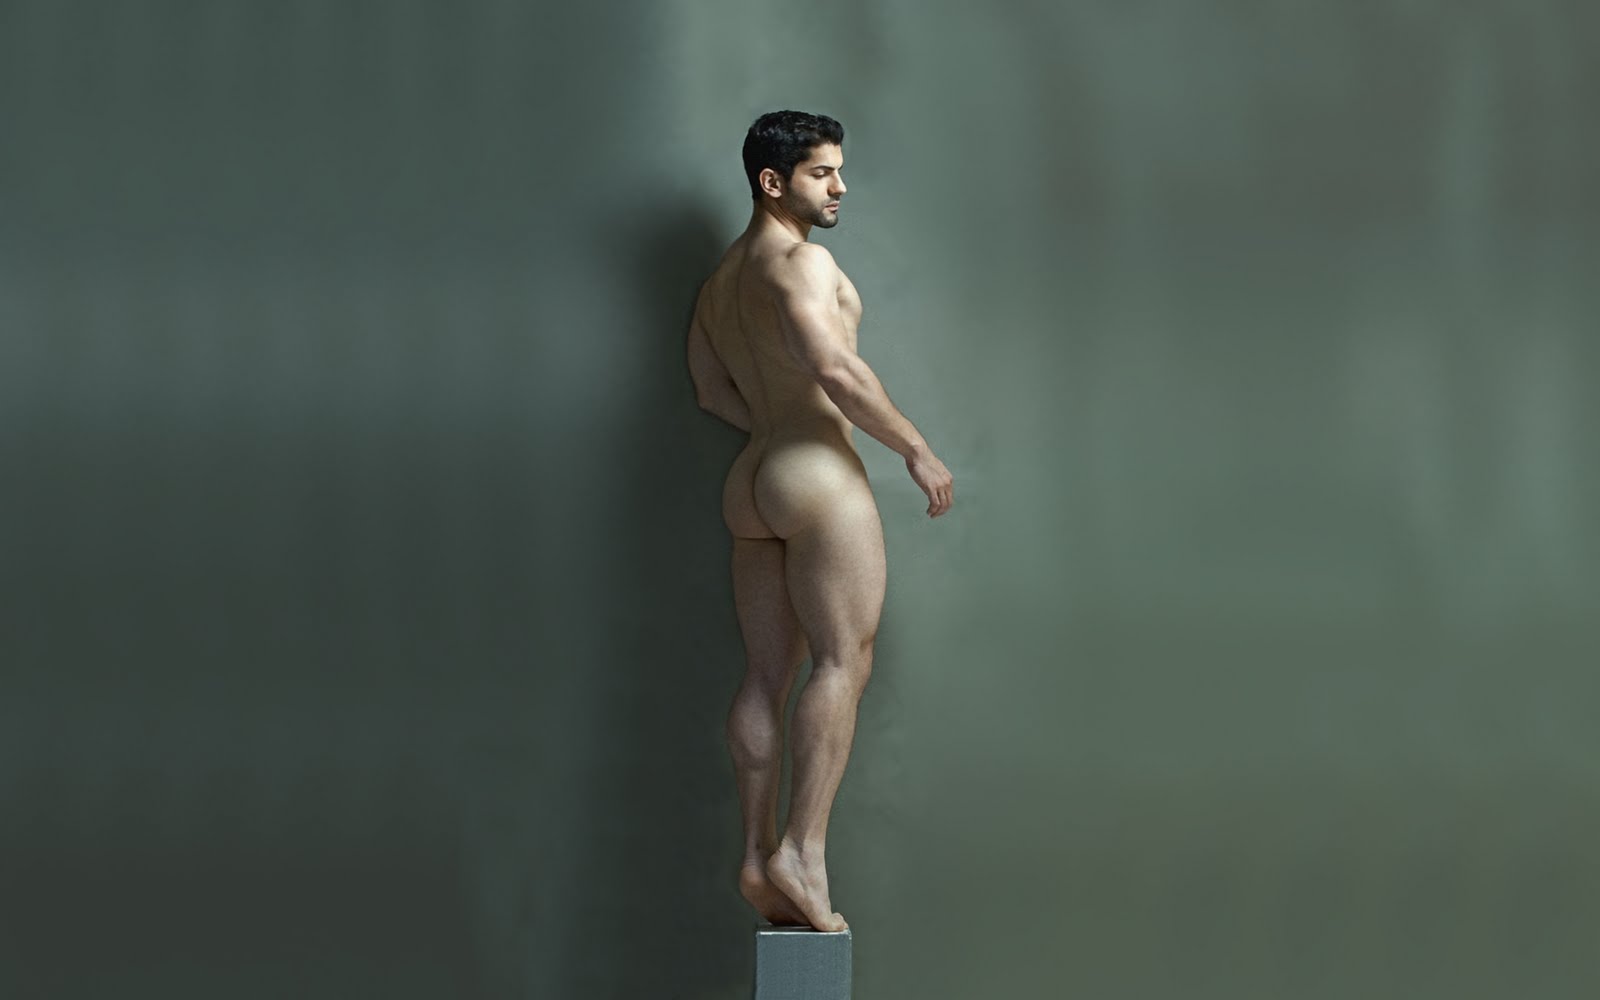 Rearview Nude Muscular Man on Pedestal - Gallery of Men